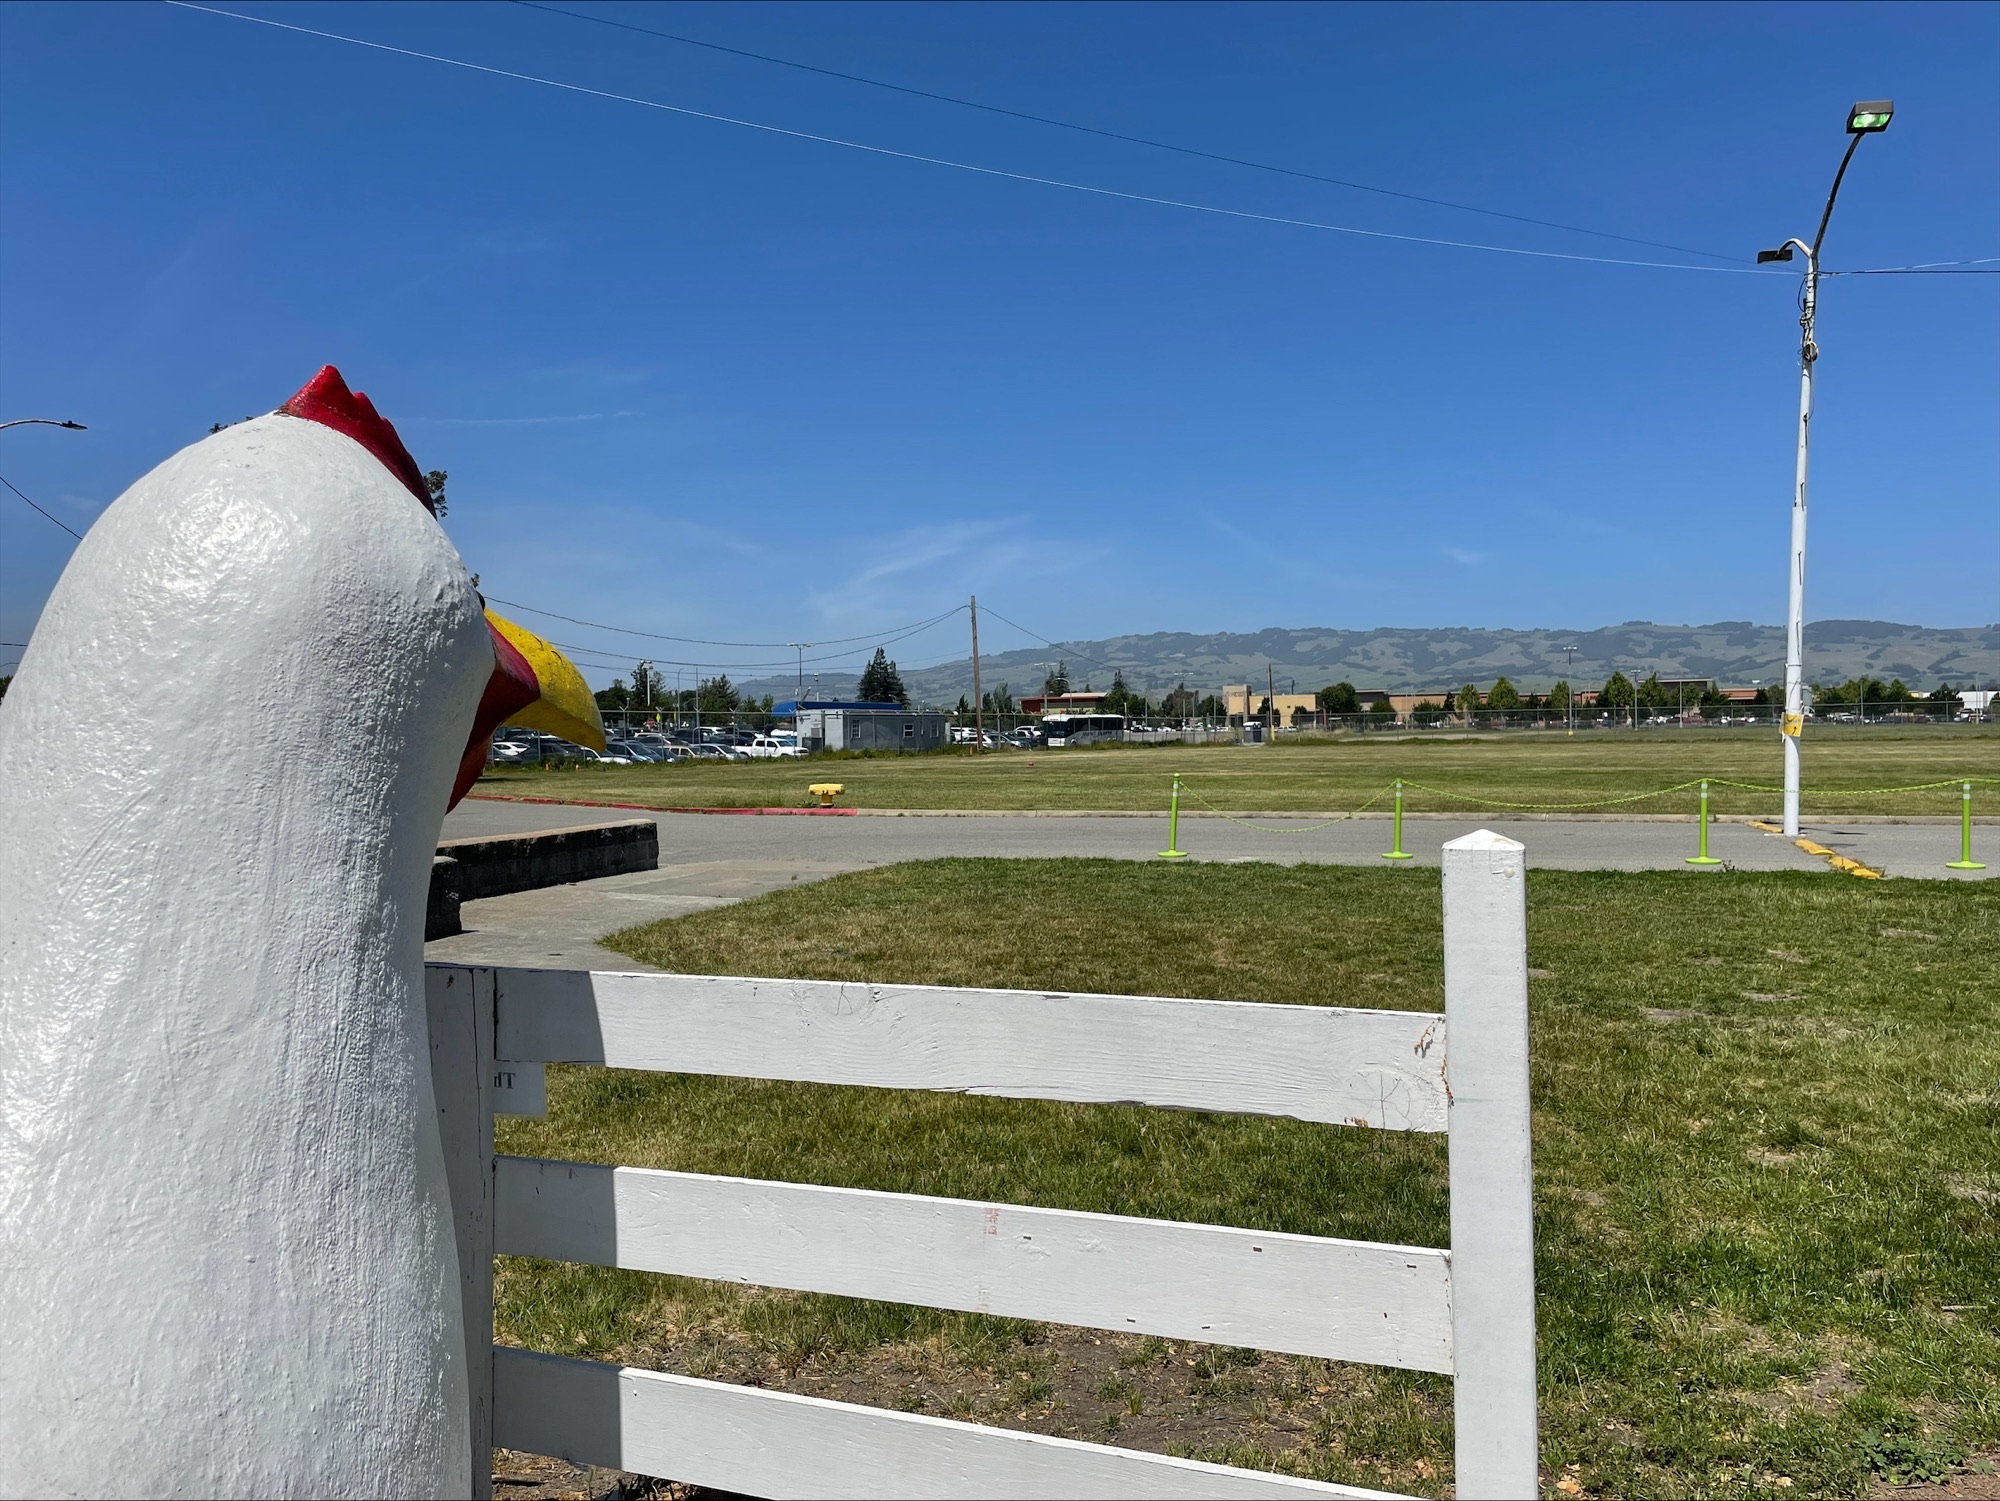 Looking past the head of a papier mache chicken towards an empty field on the Petaluma Fairgrounds.